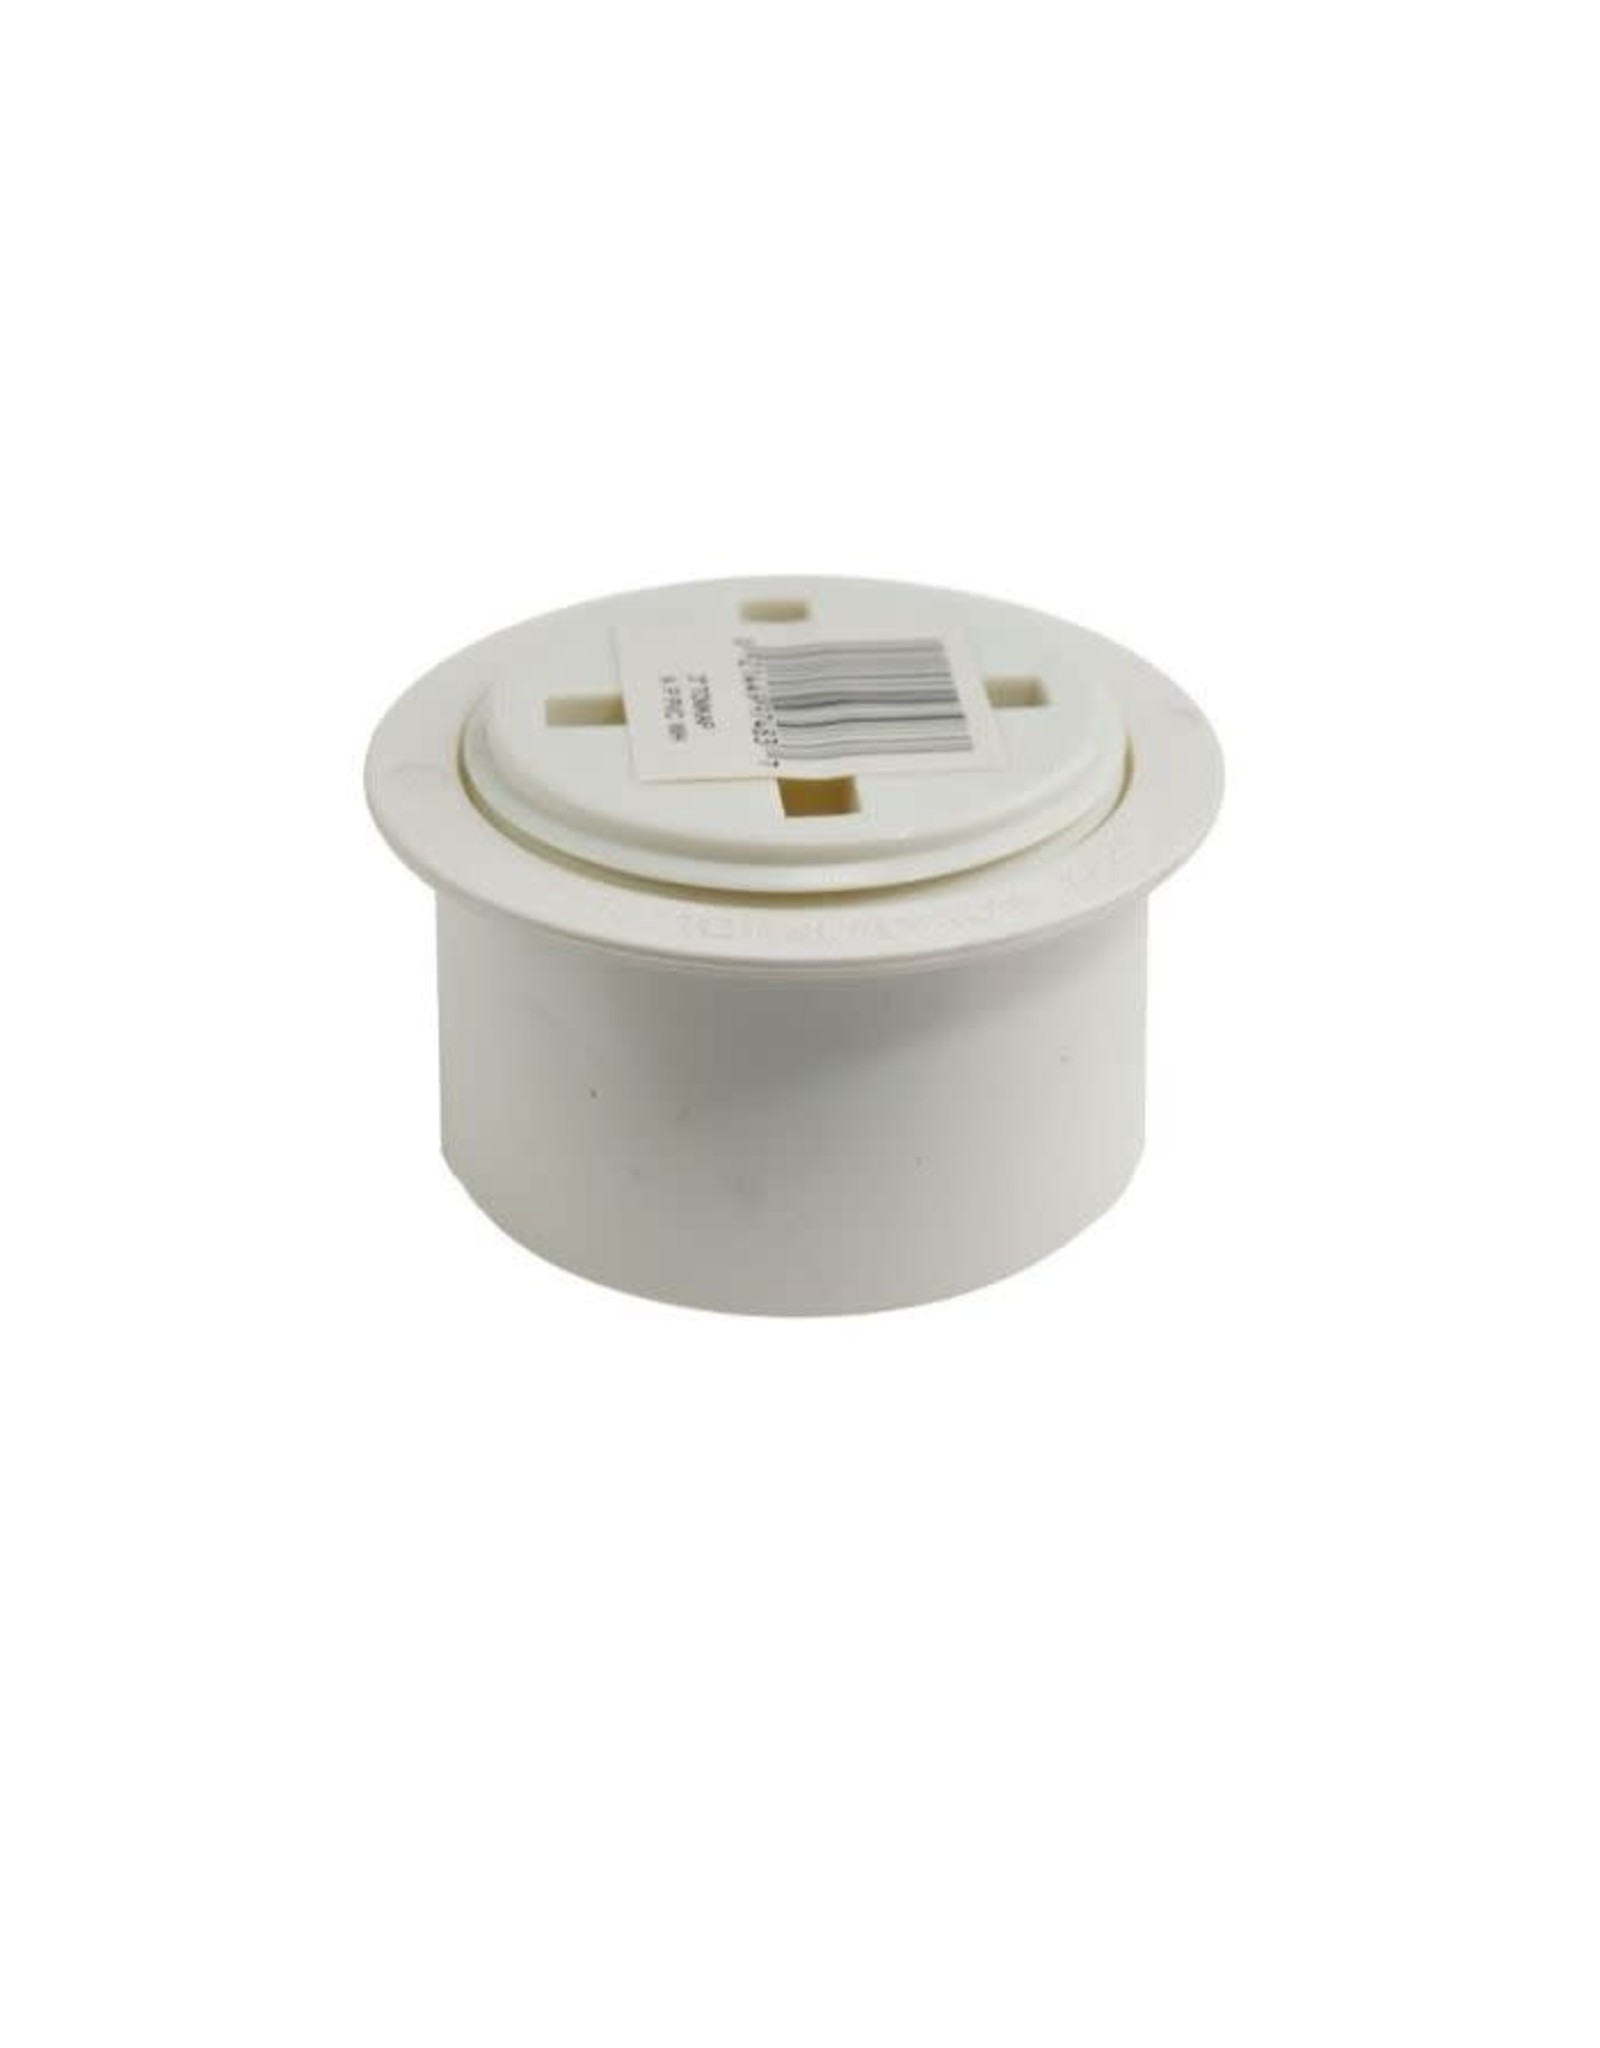 RECTORSEAL Tom-Kap  Flush-Fit Cleanout Adapter & Plug